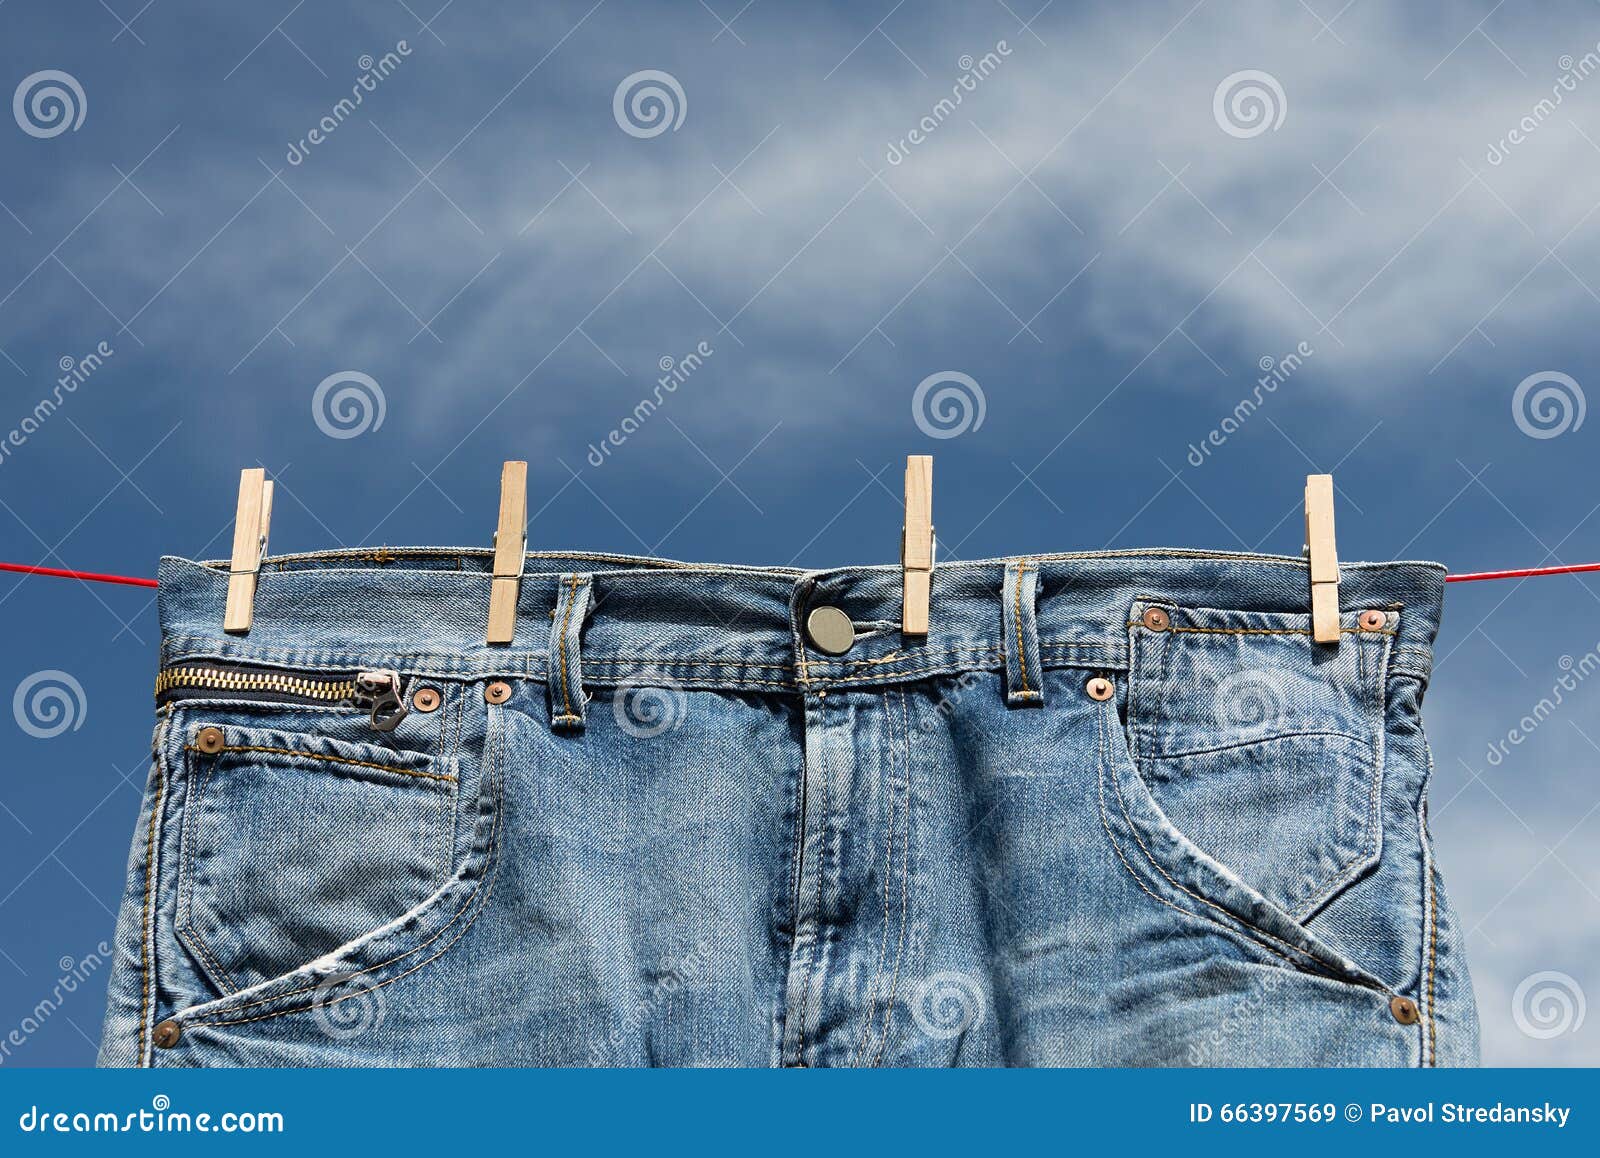 Jeans on a clothesline stock image. Image of summer, denim - 66397569